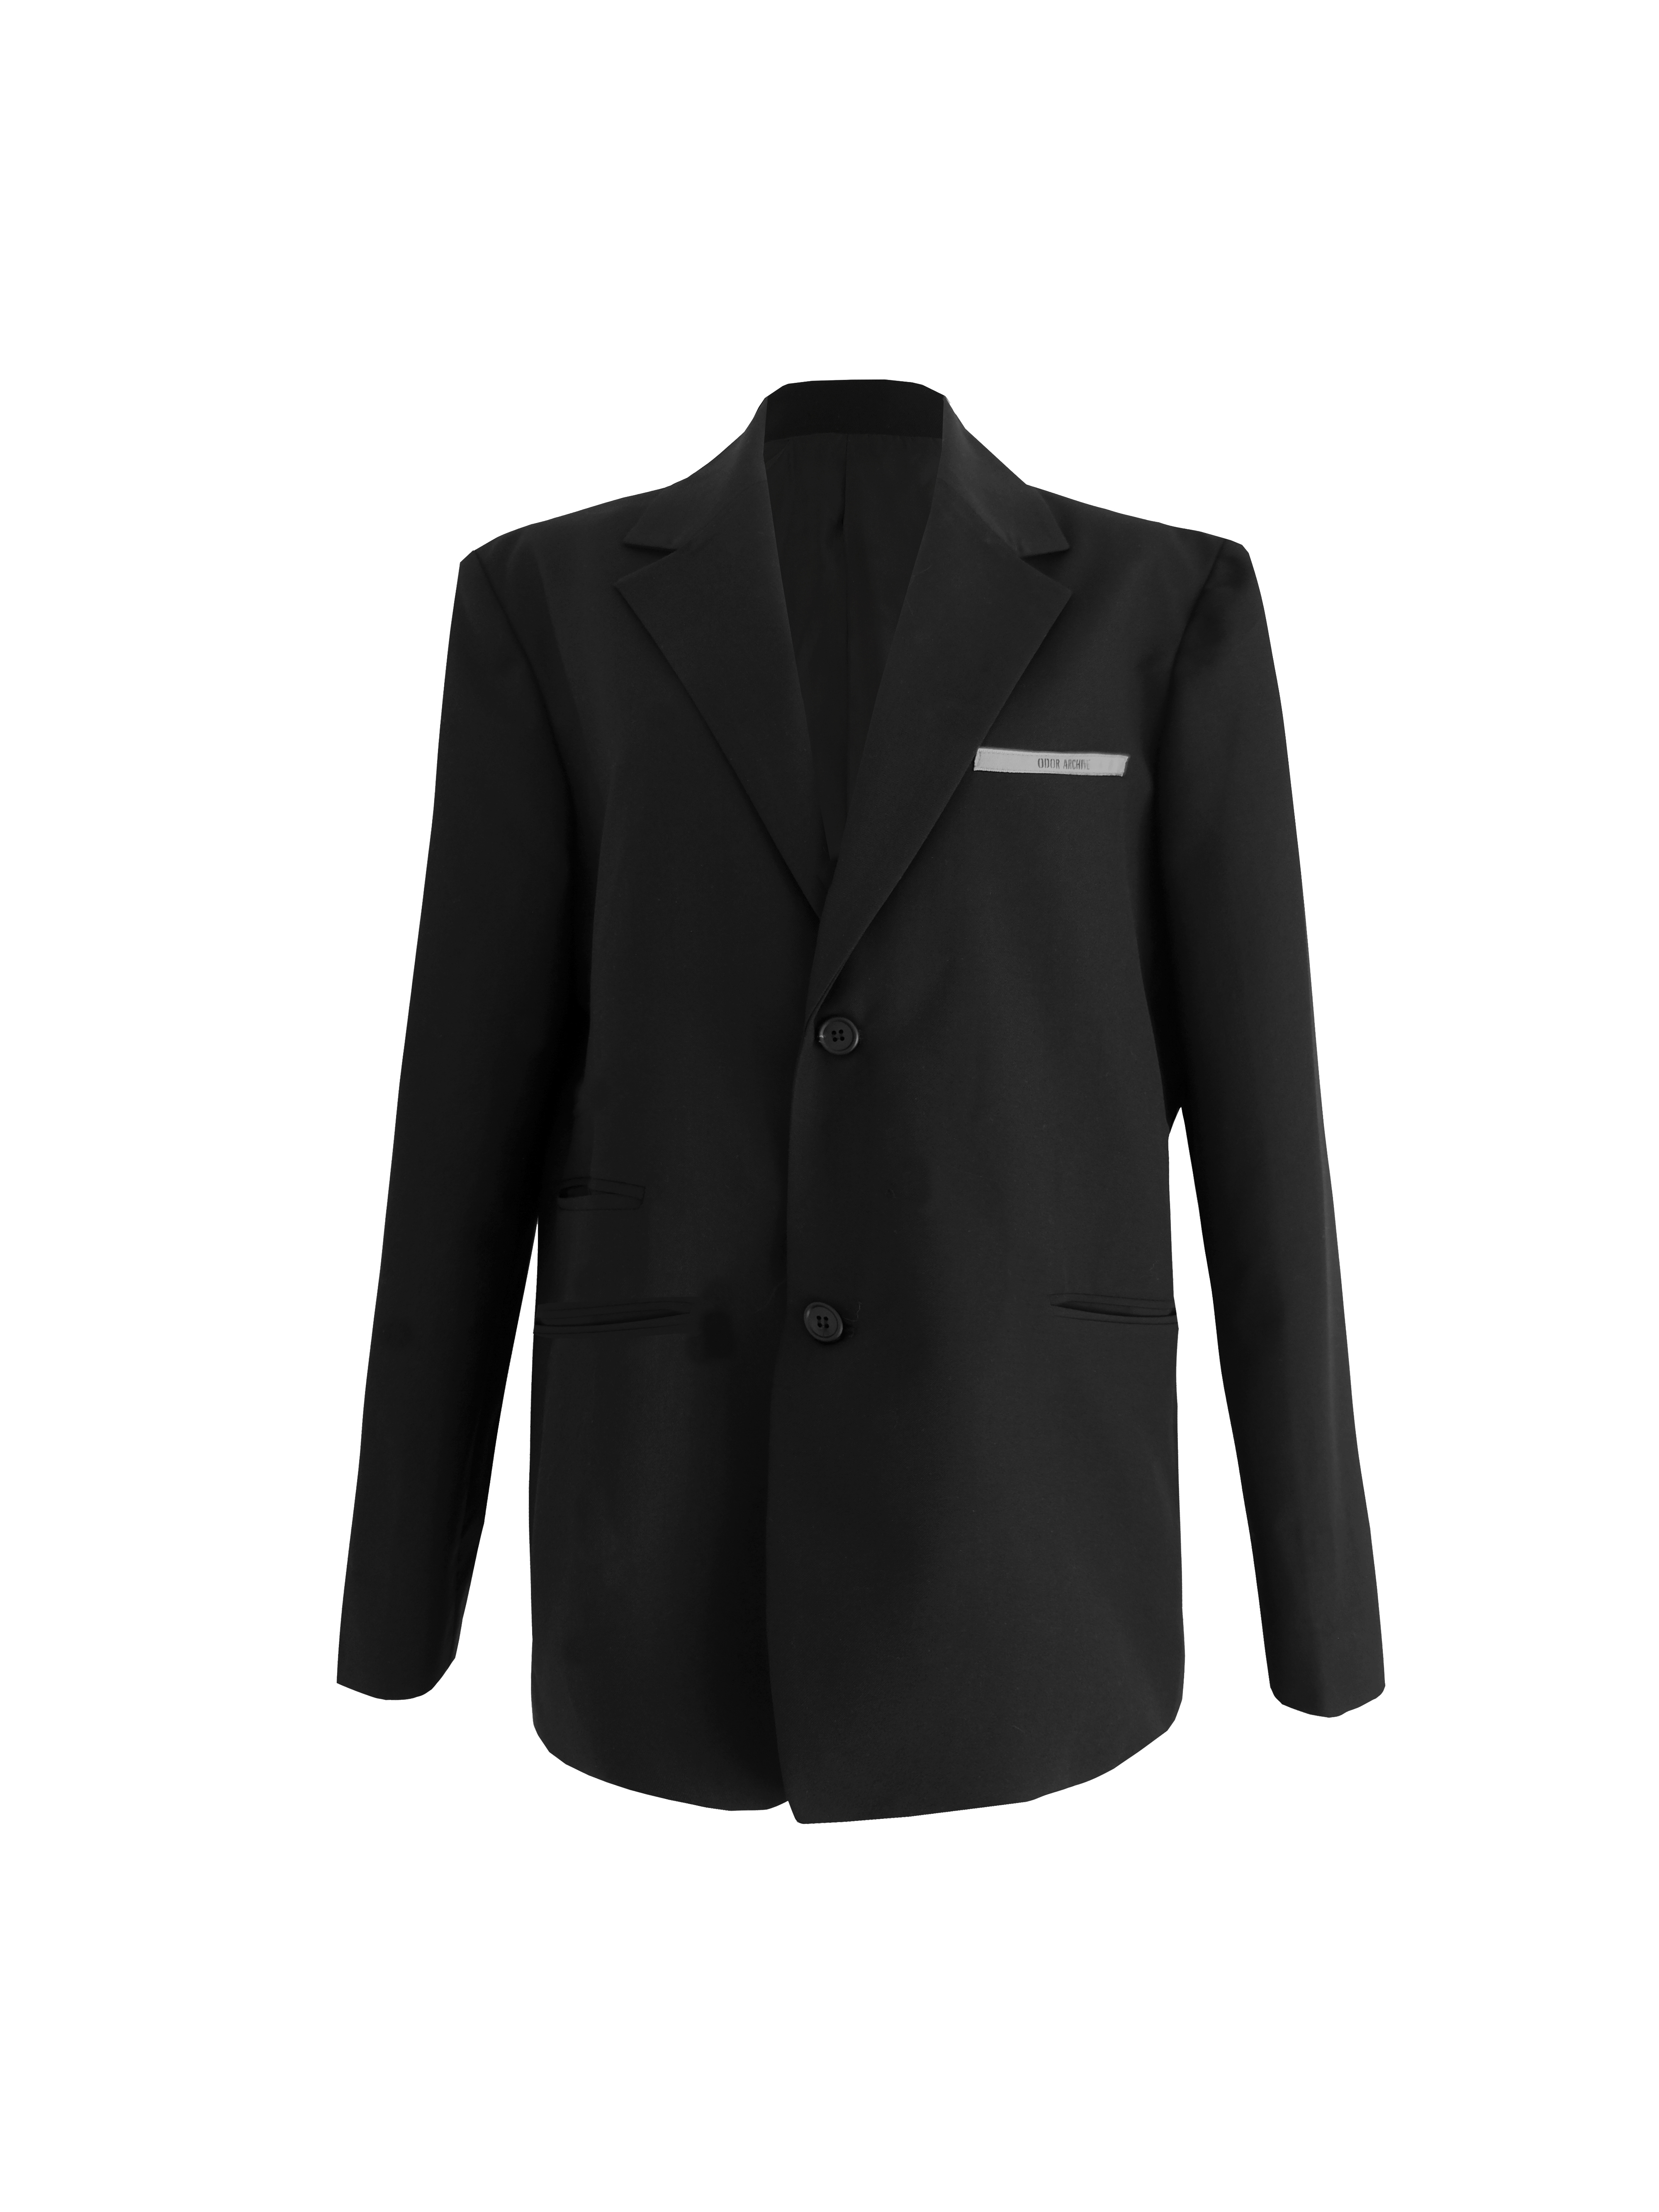 [ODOR MADE] Archive black blazer